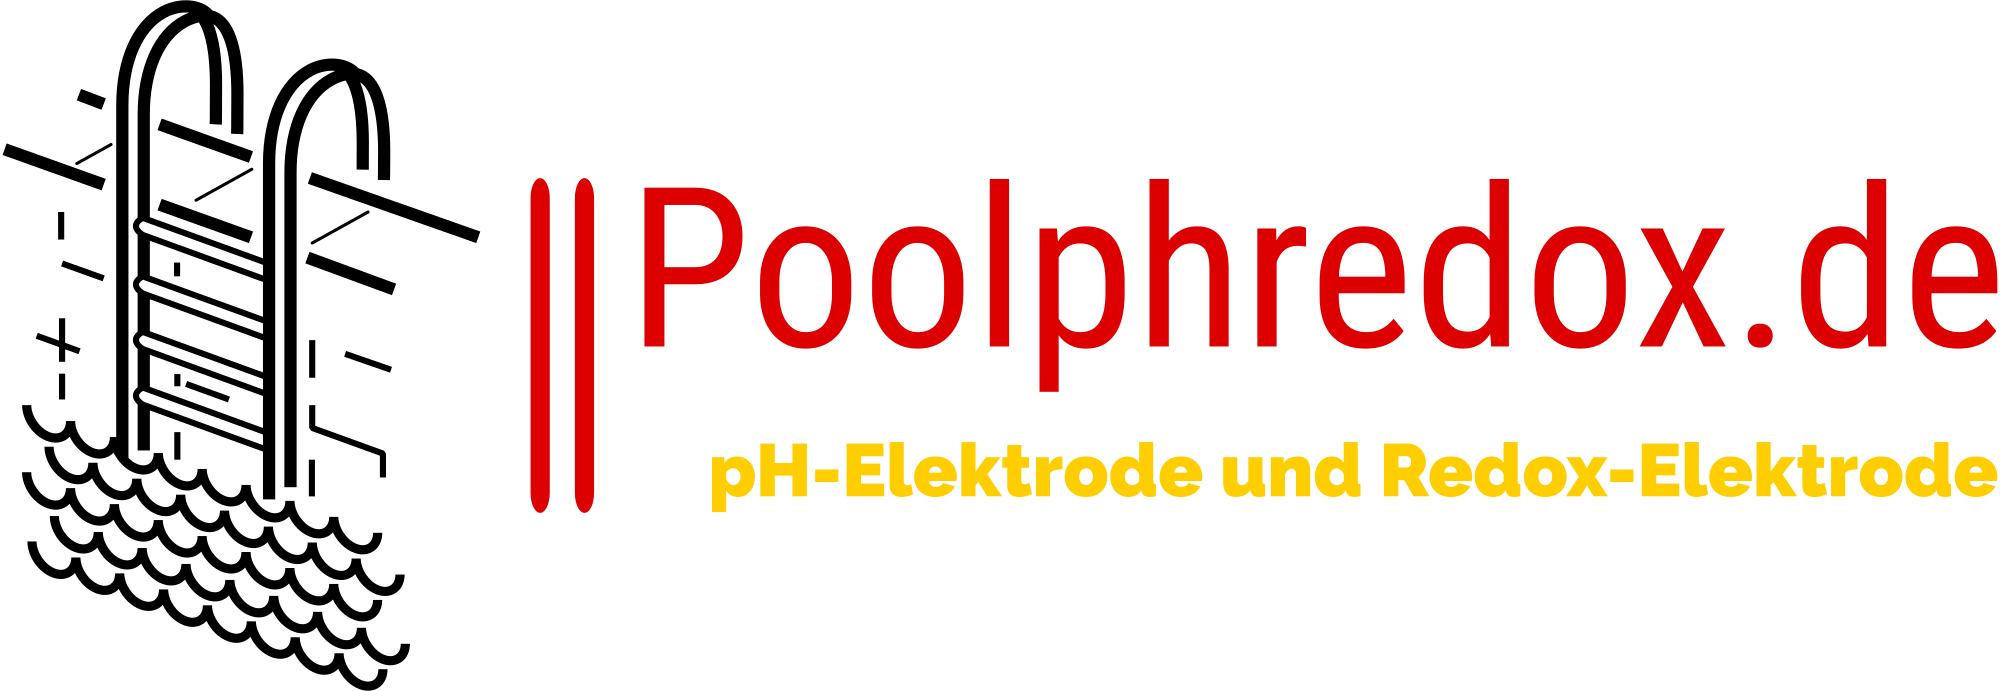 poolphredox.de